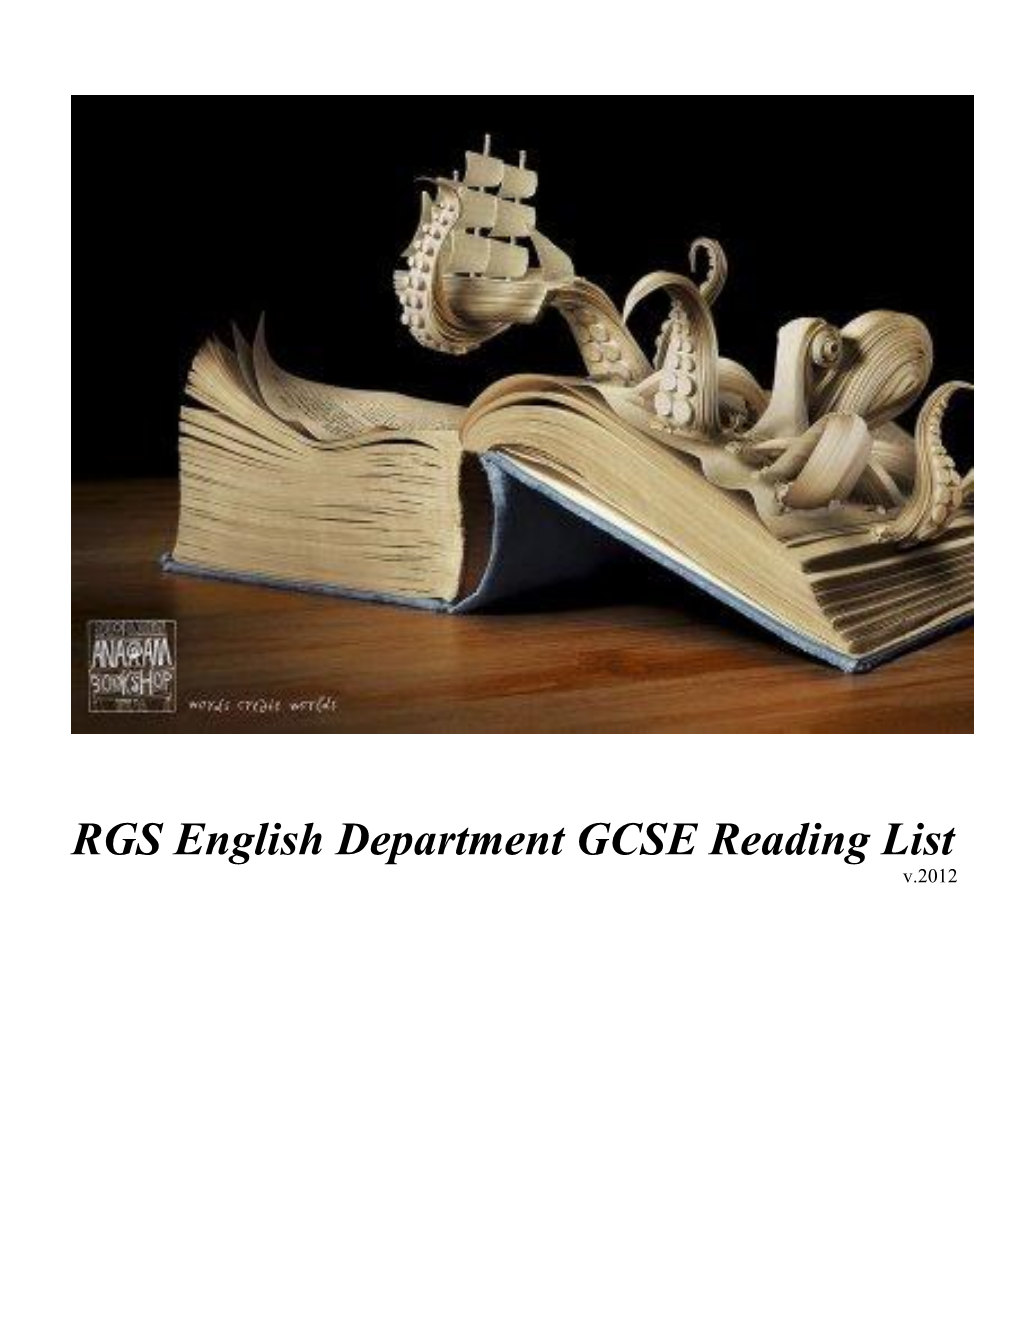 RGS English Department GCSE Reading List V.2012